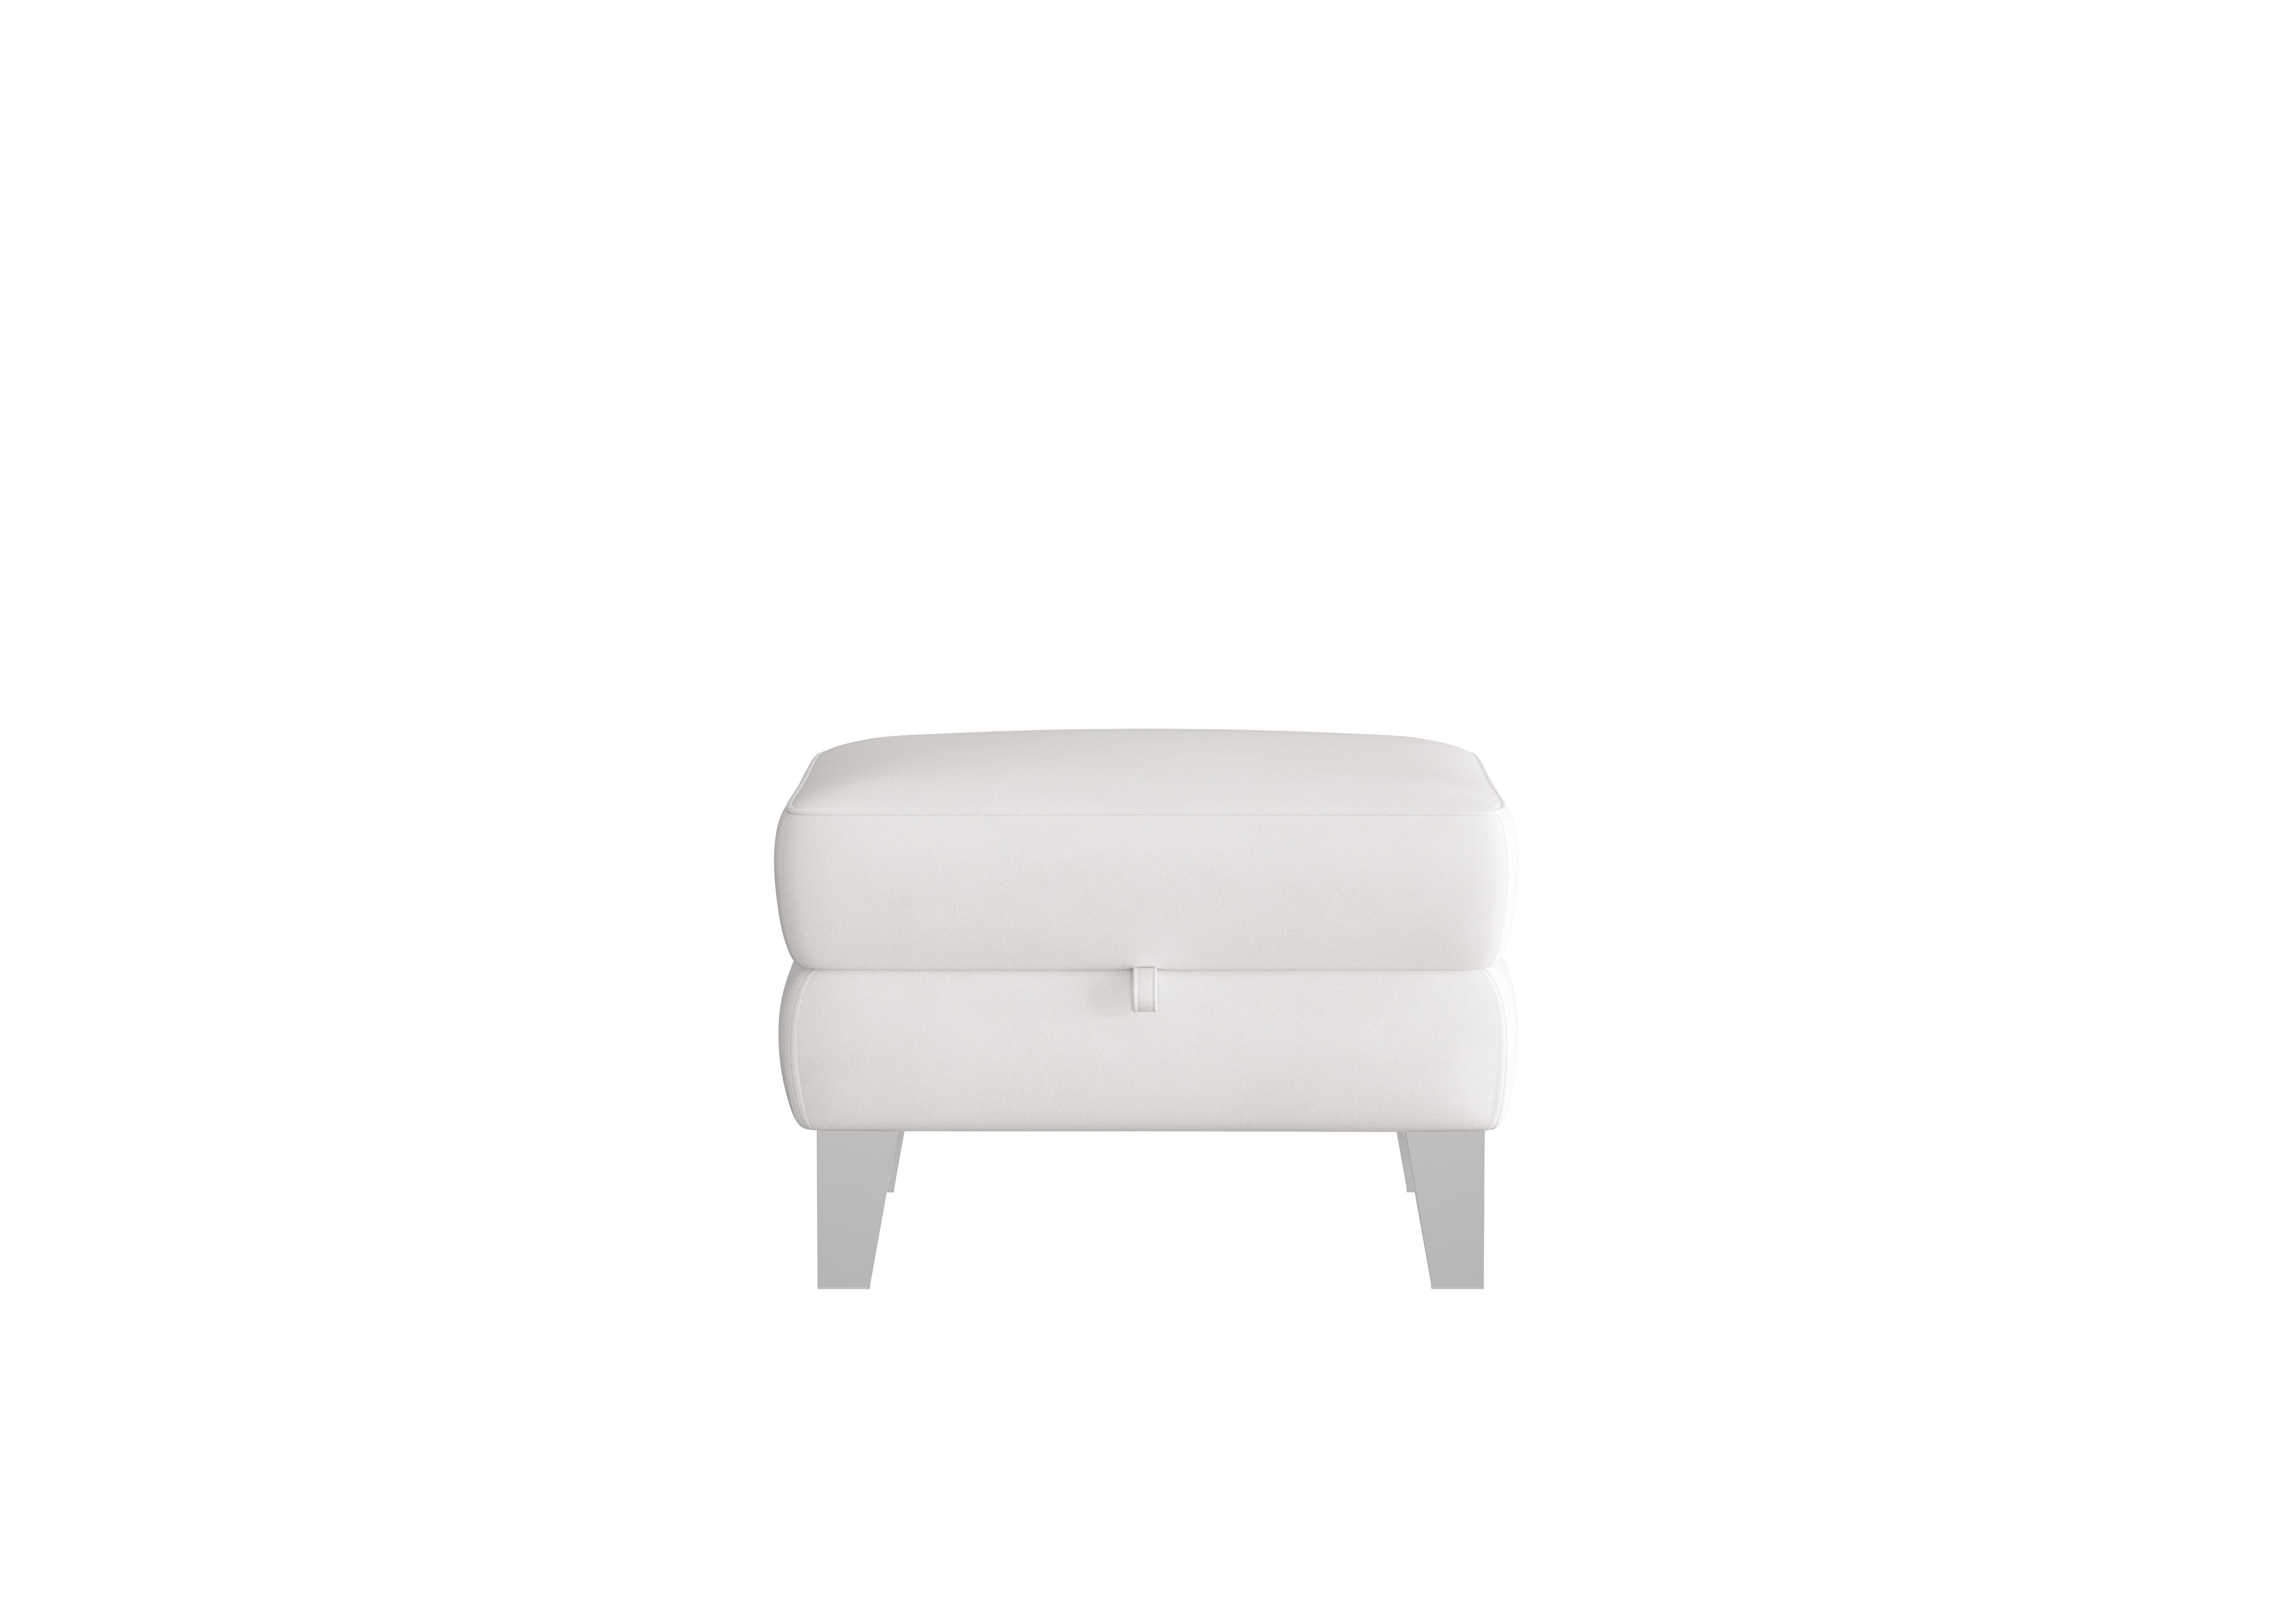 Amarilla Leather Storage Footstool in Bv-744d Star White on Furniture Village